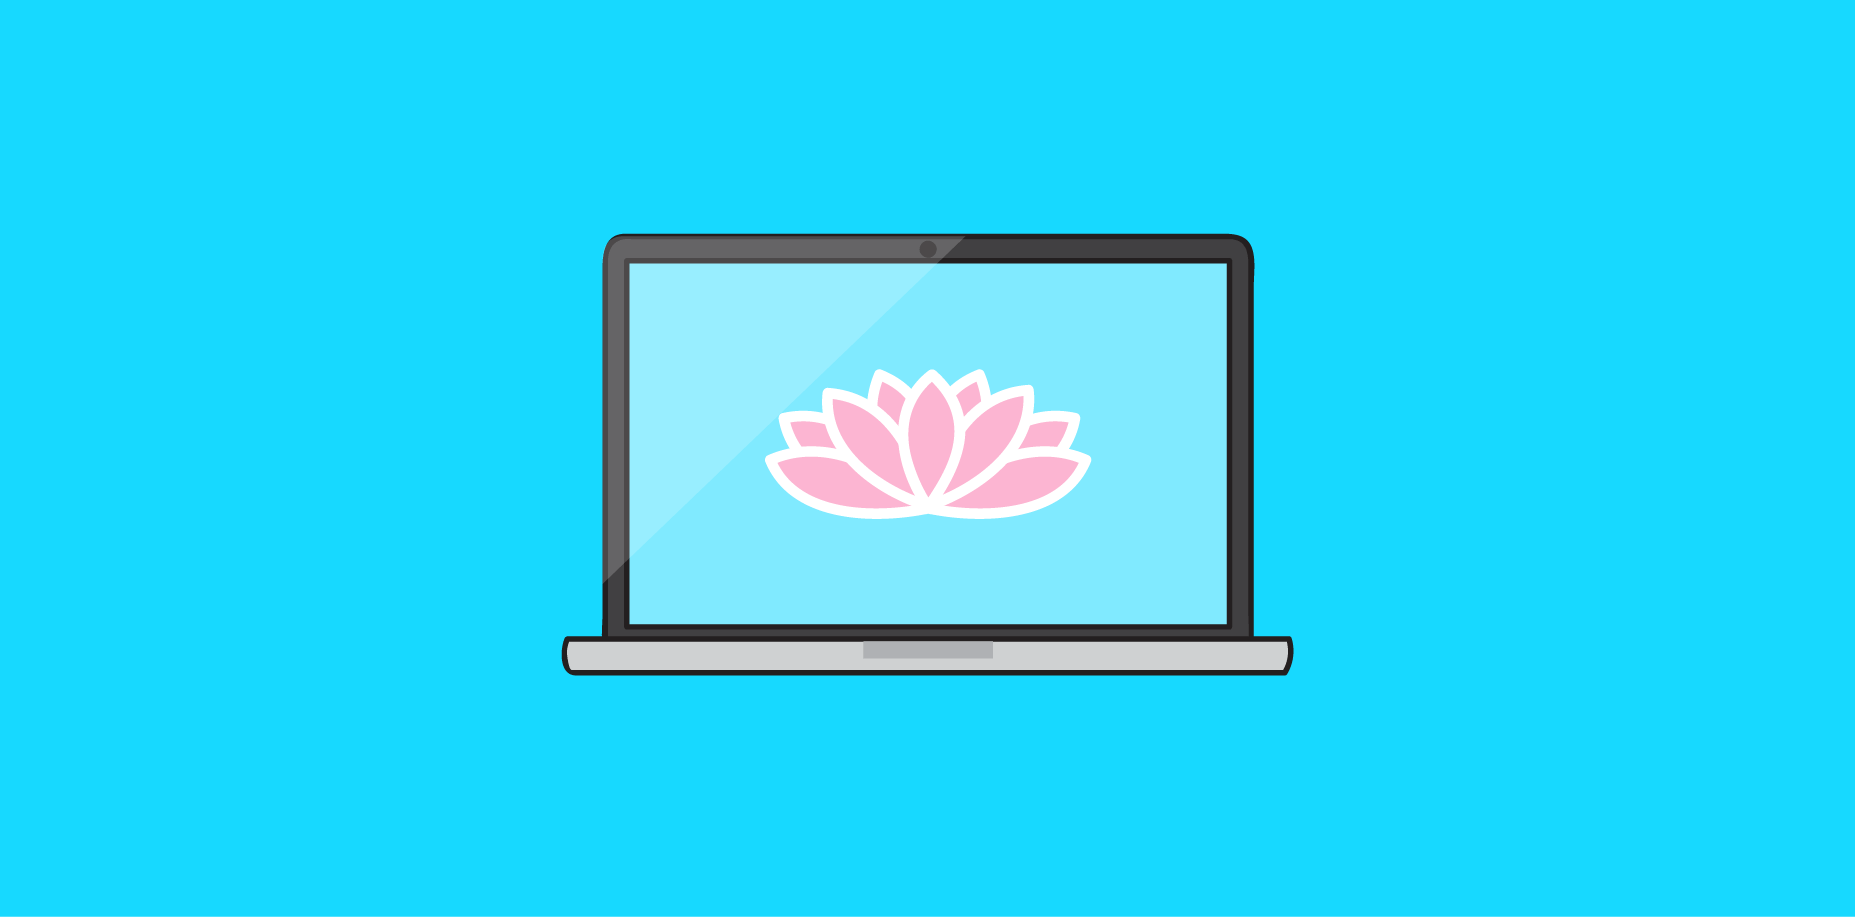 Lotus flower on a laptop screen